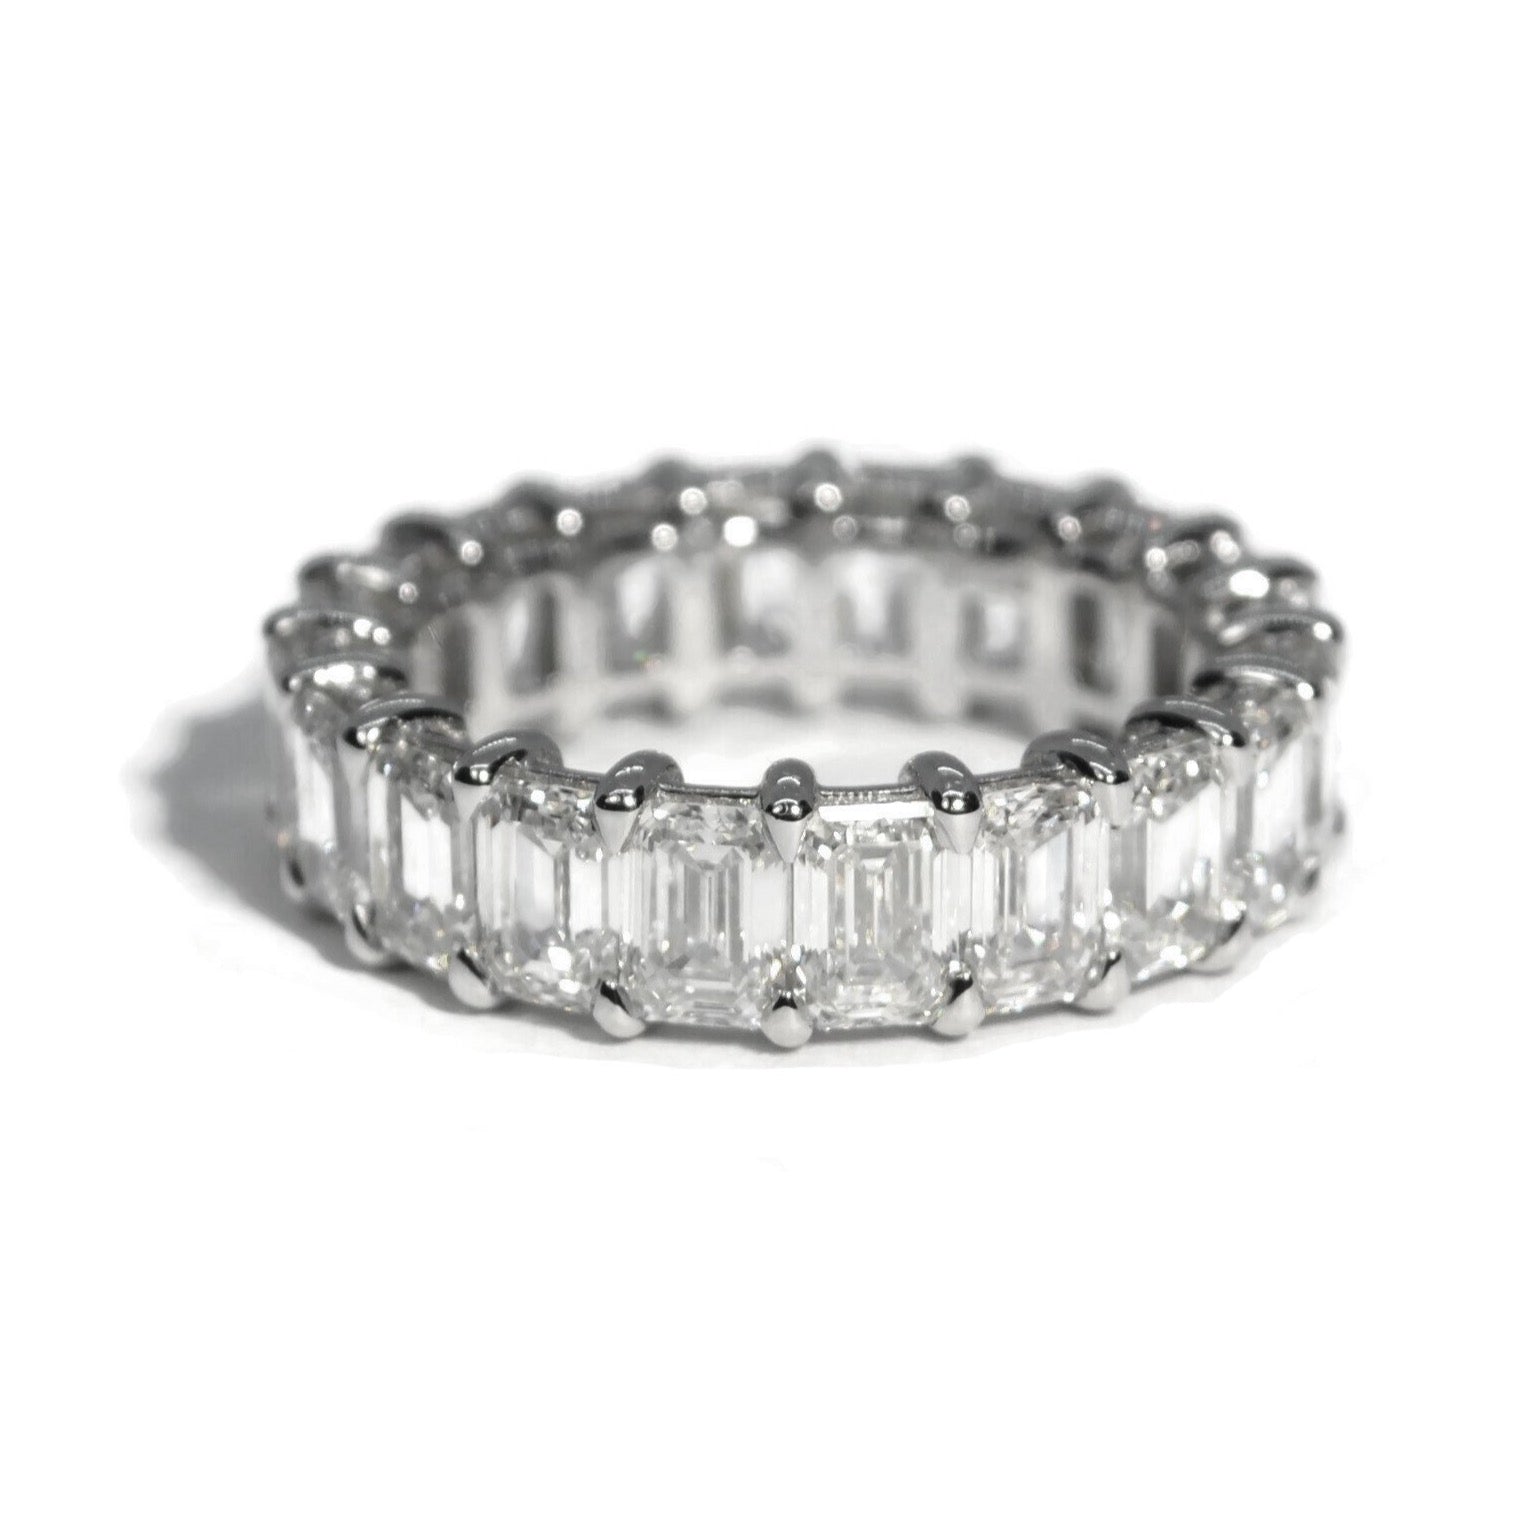 AFJ Diamond Collection - Eternity Band Ring with Emerald-cut Diamonds 6.97 carats, Platinum